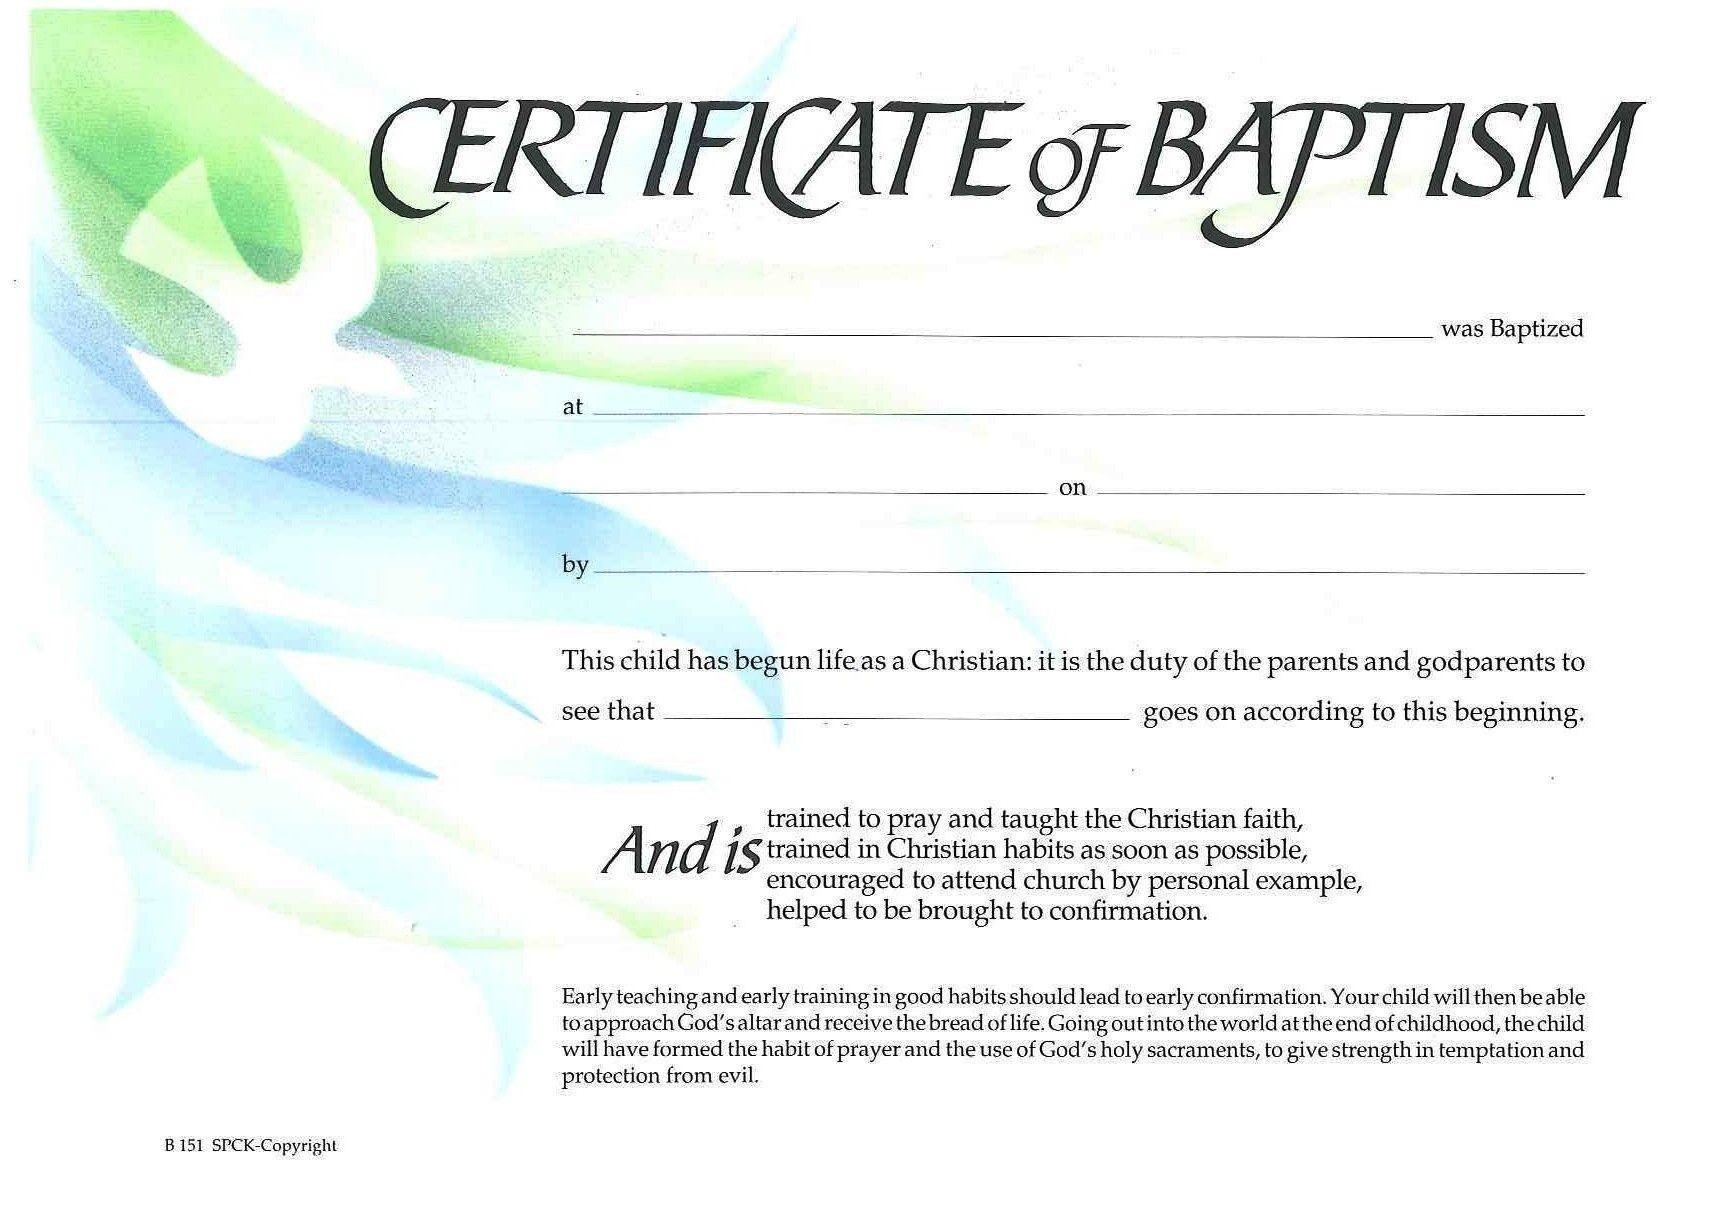 ❤Free Sample Certificate Of Baptism form Template❤ With Christian Baptism Certificate Template